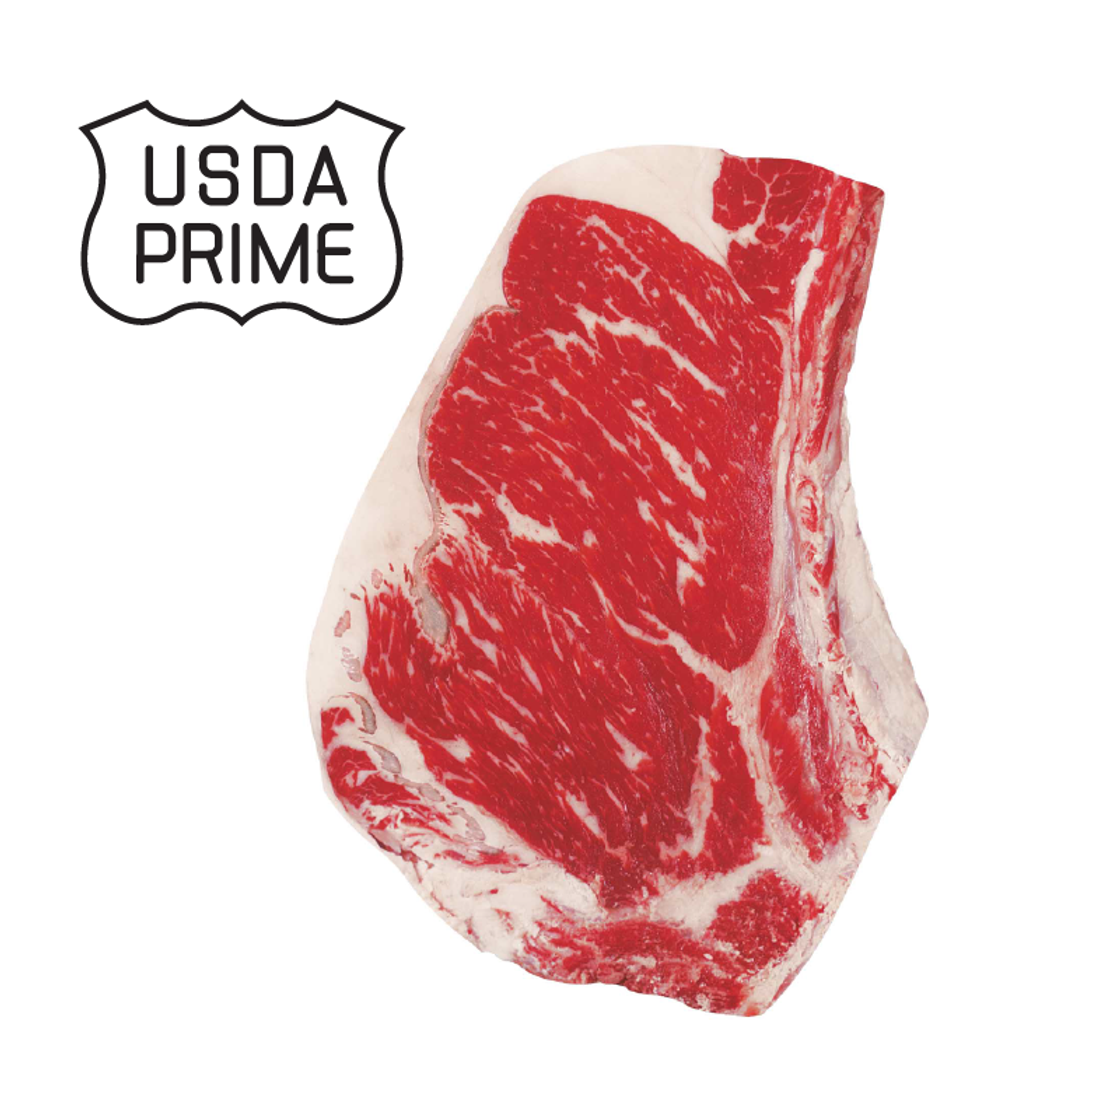 USDA Beef Quality Grading